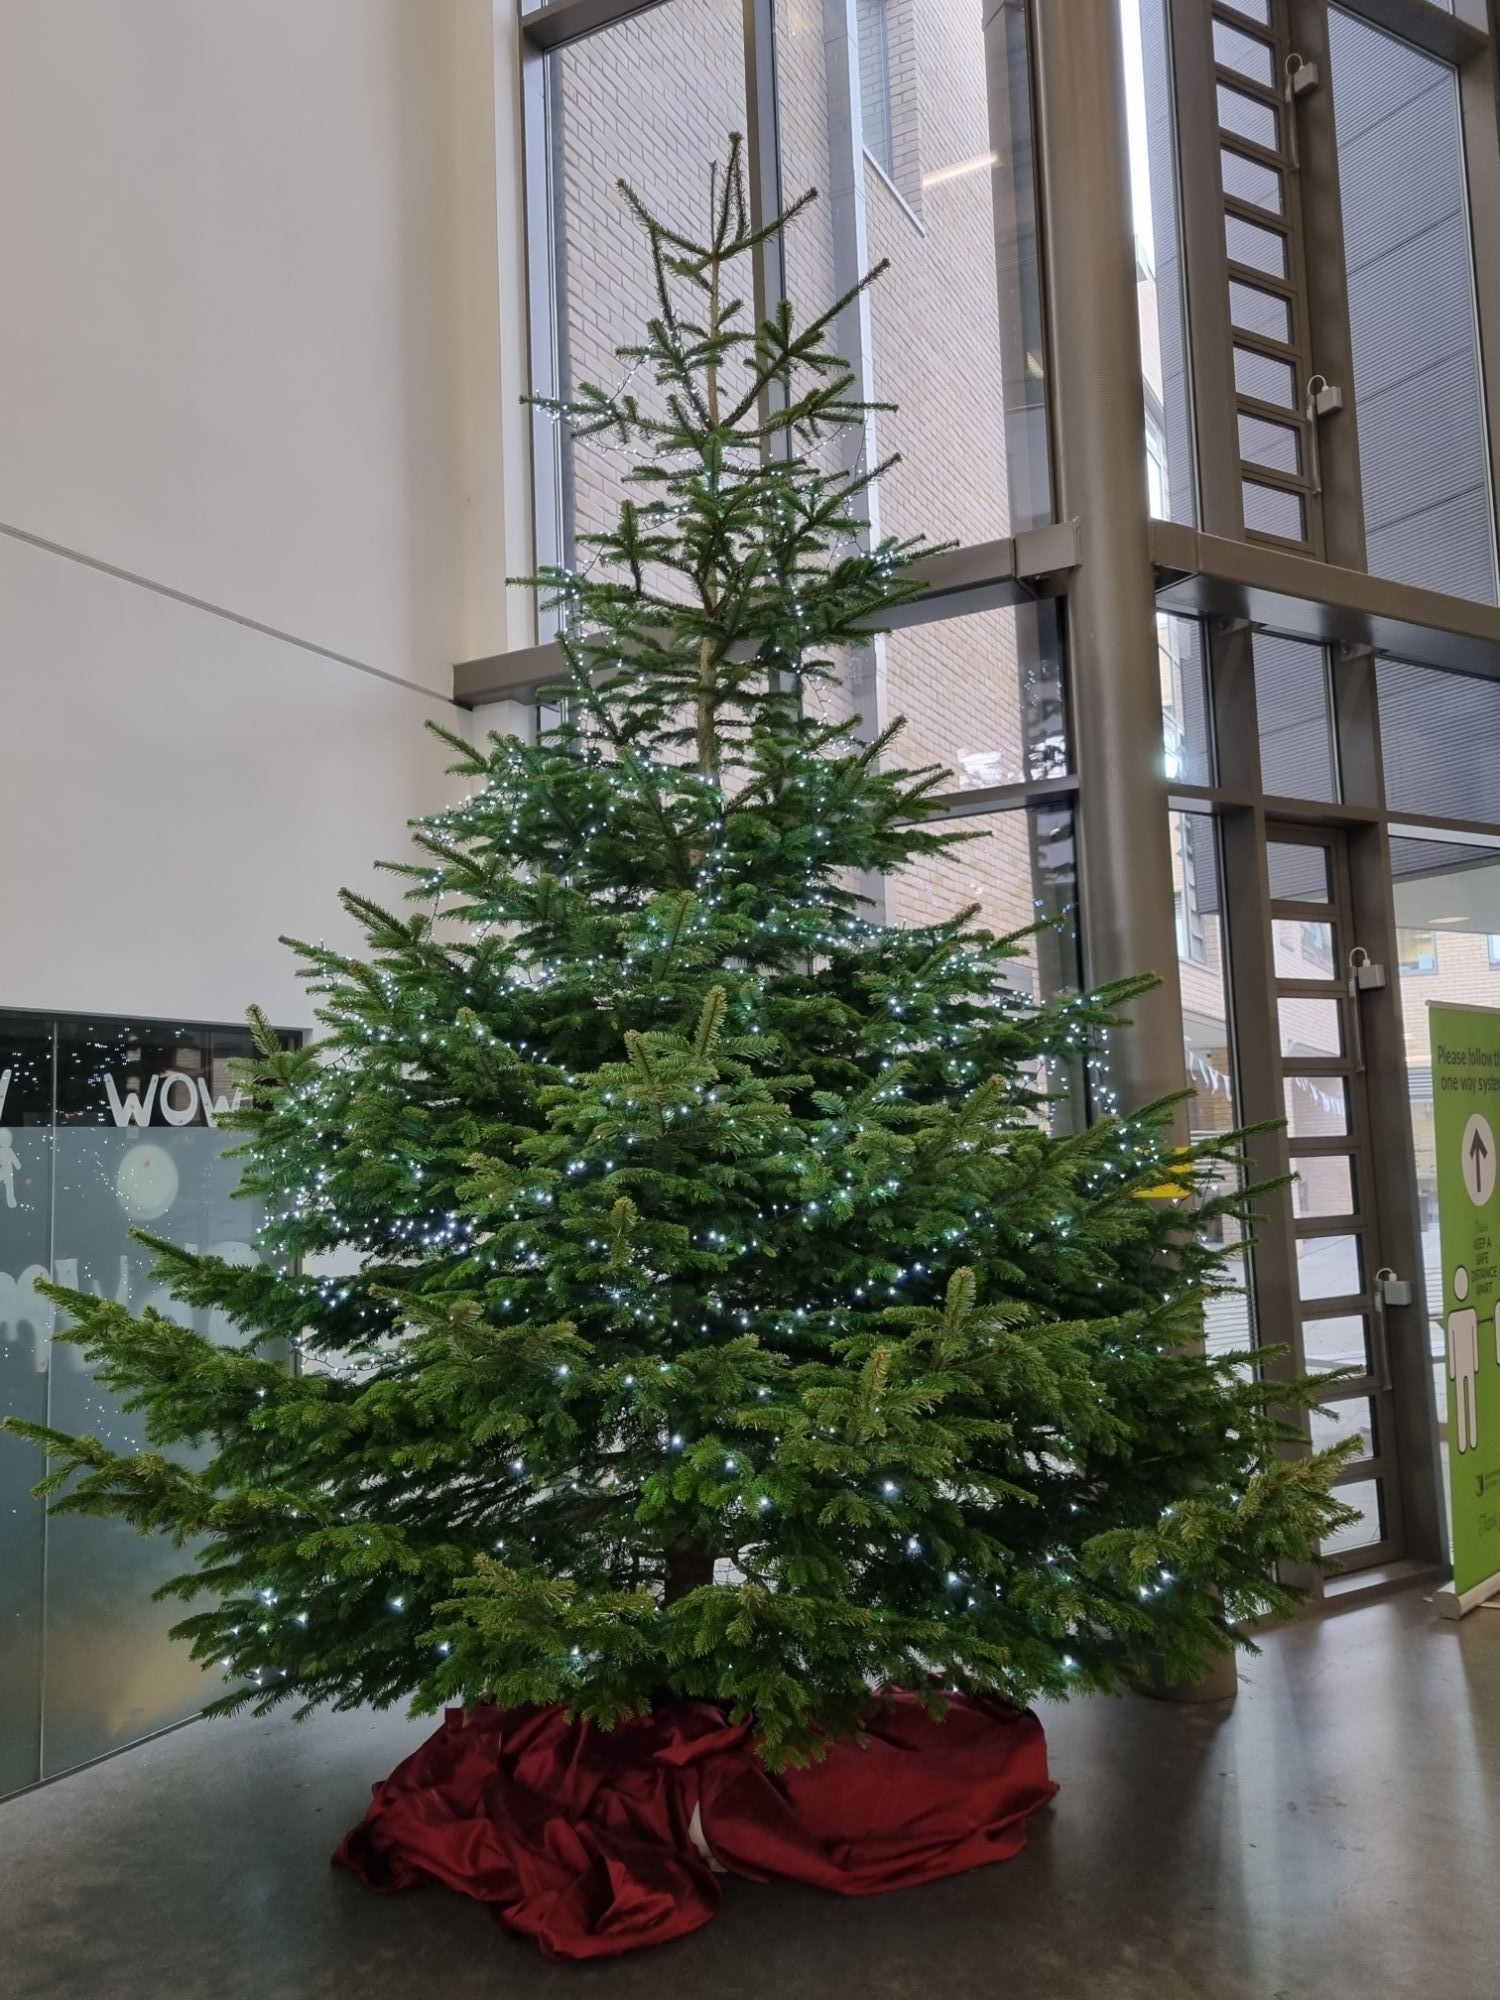 Image of school Christmas tree